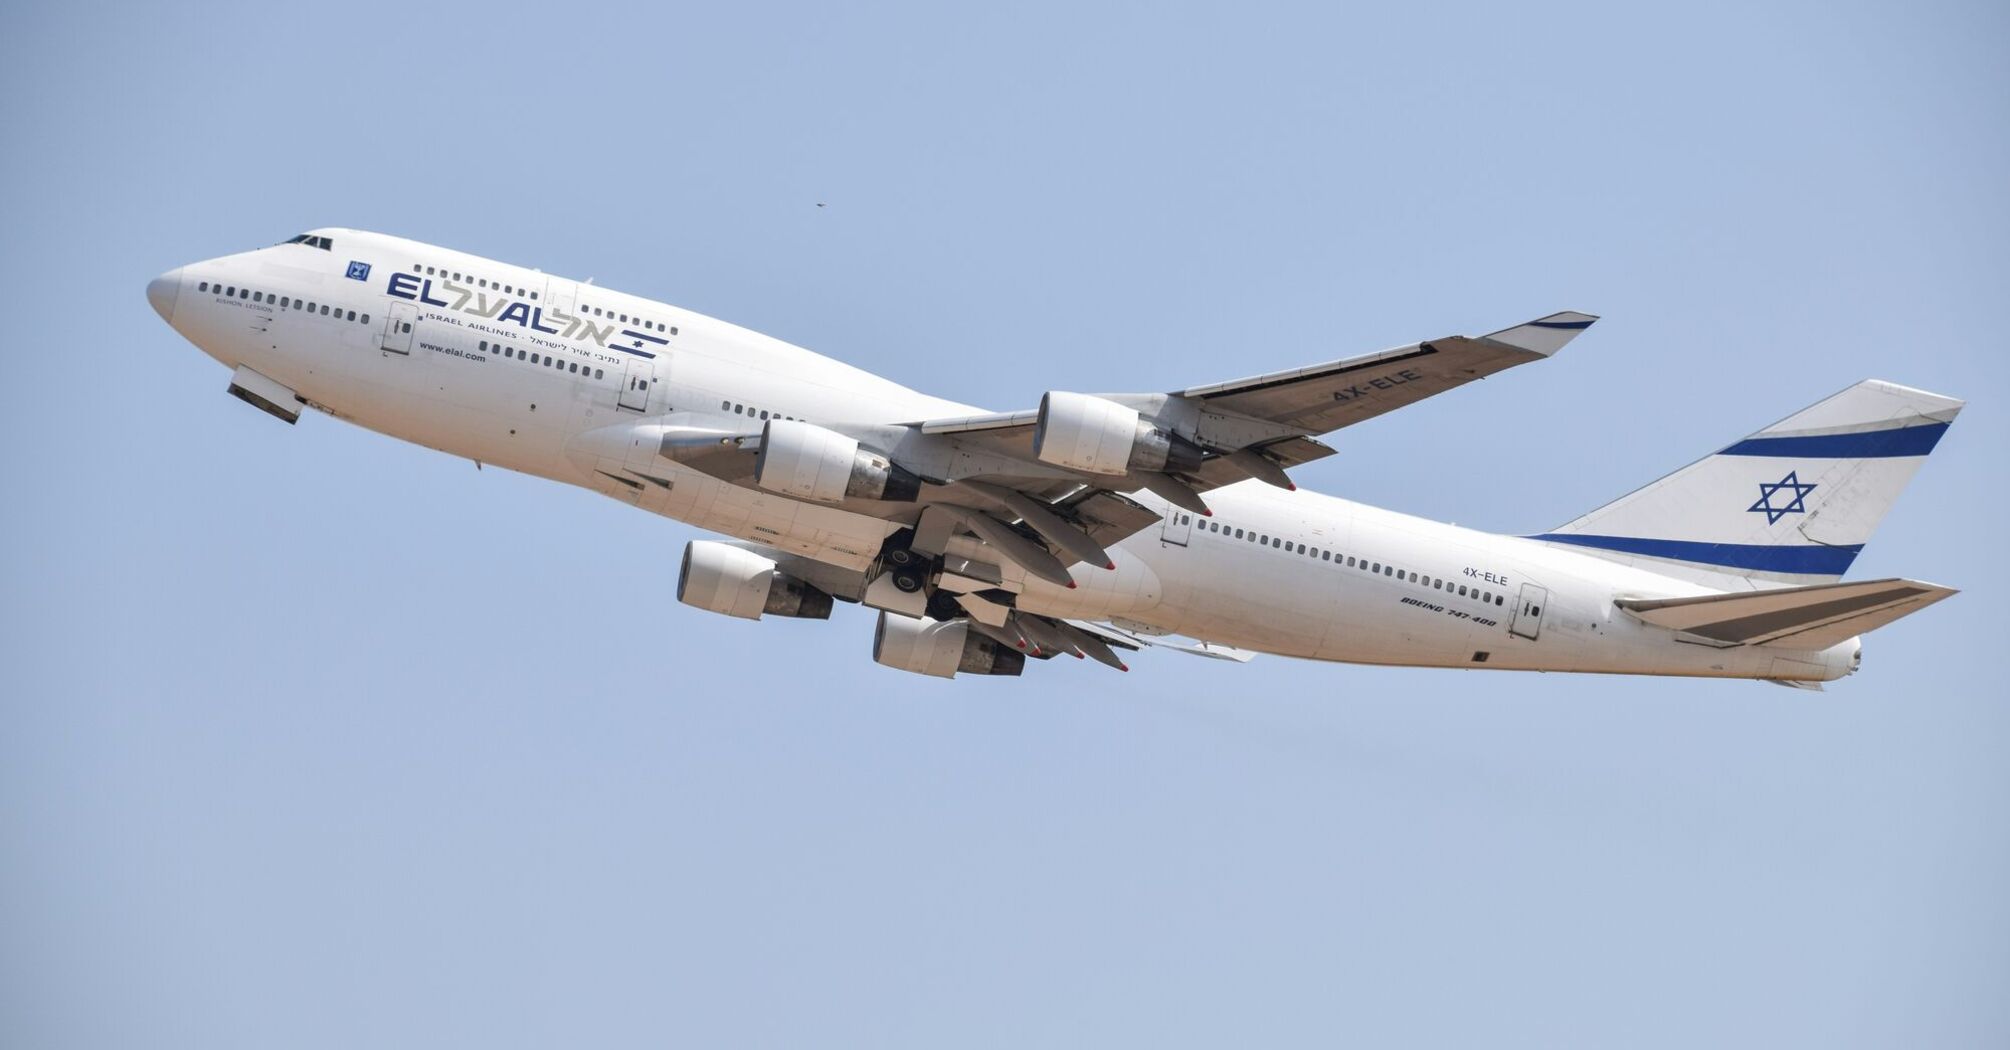 El Al Boeing 747 taking off from Ben Gurion airport.